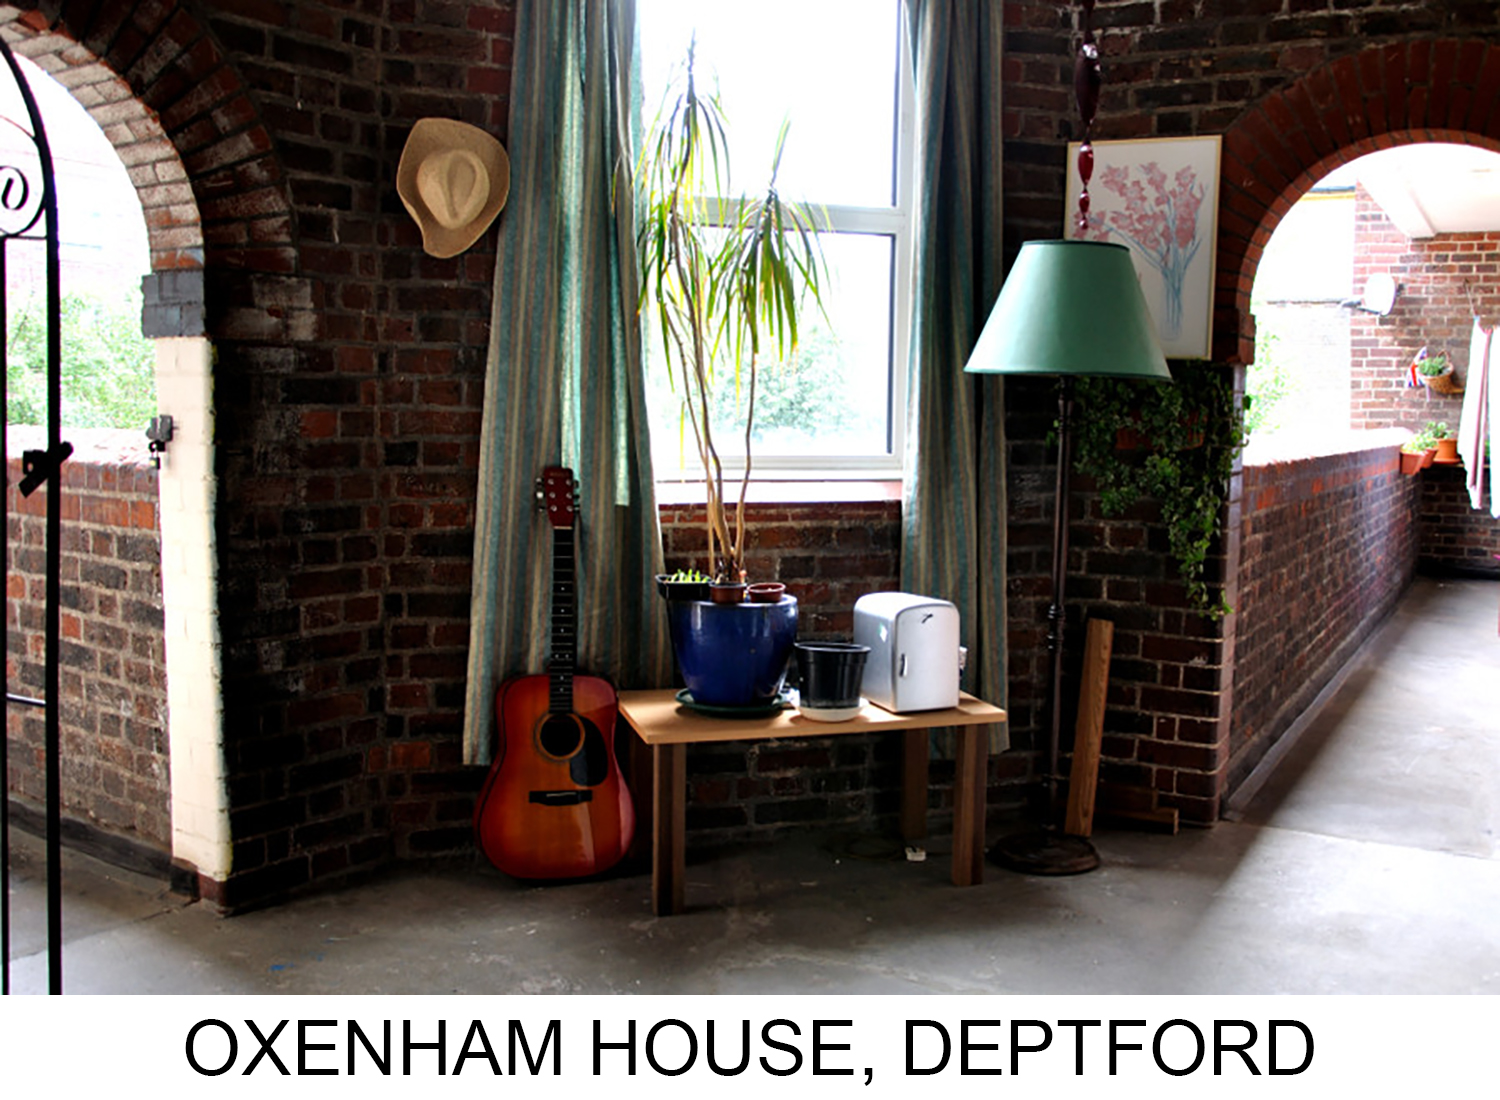 Oxenham House, Deptford